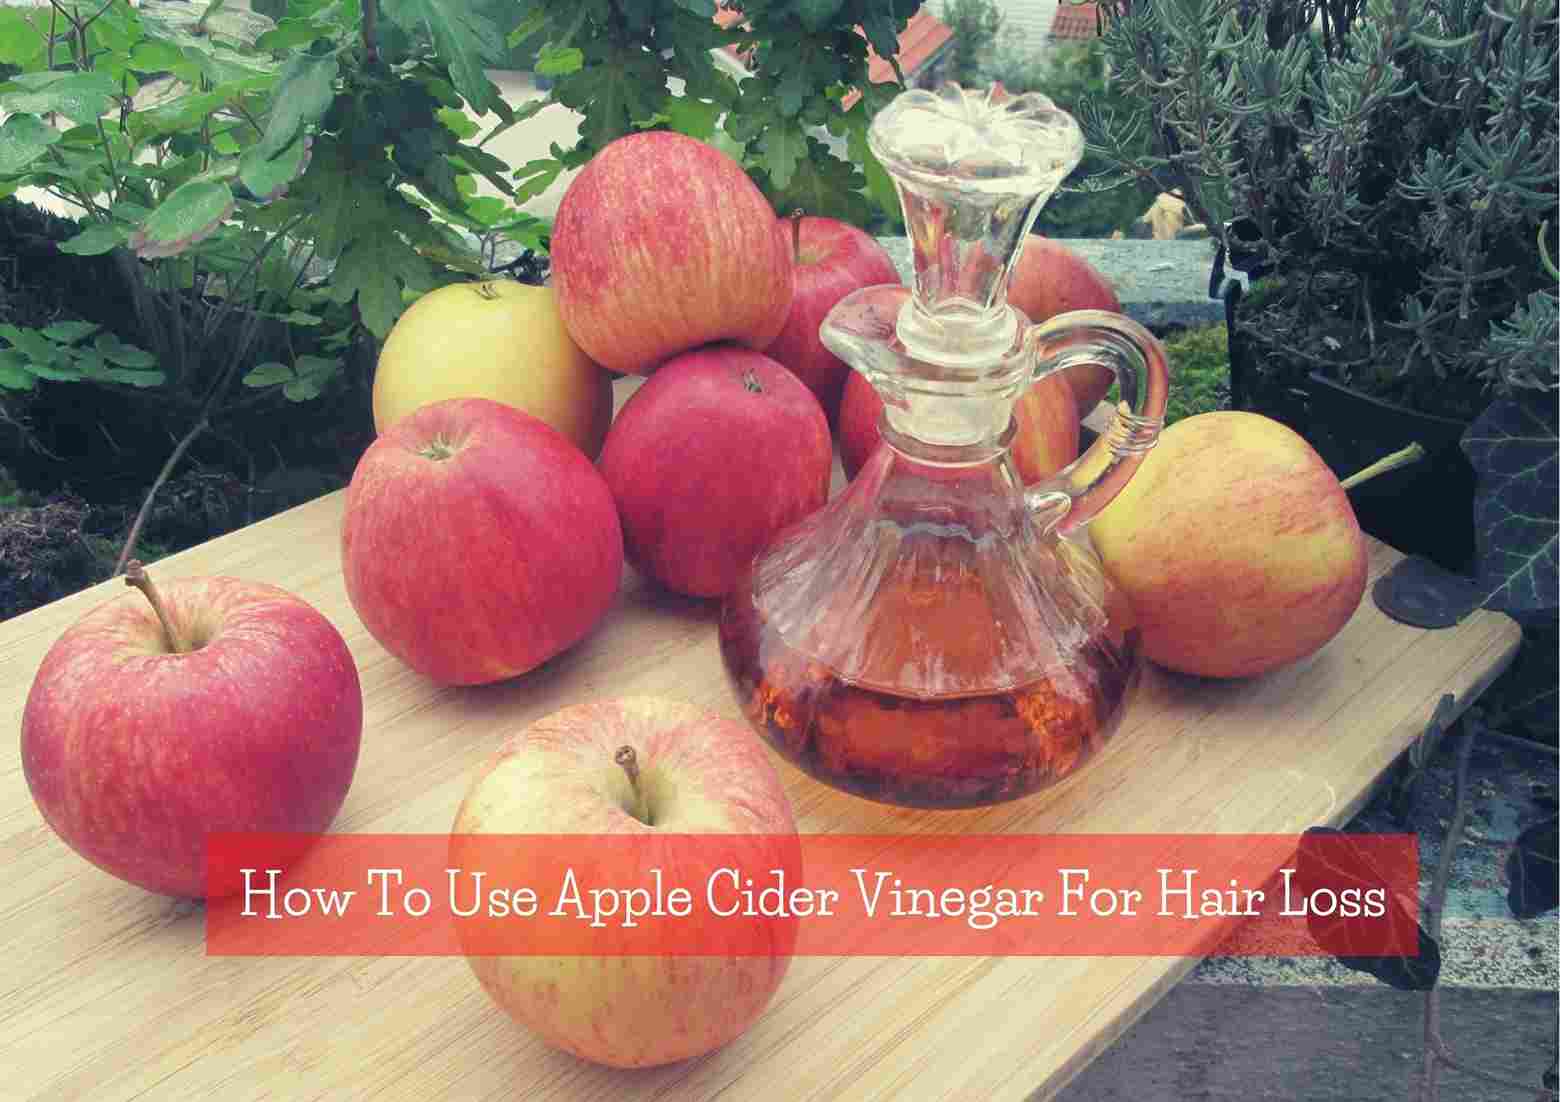 Apple cider vinegar for hair fall | Dr Batra's™